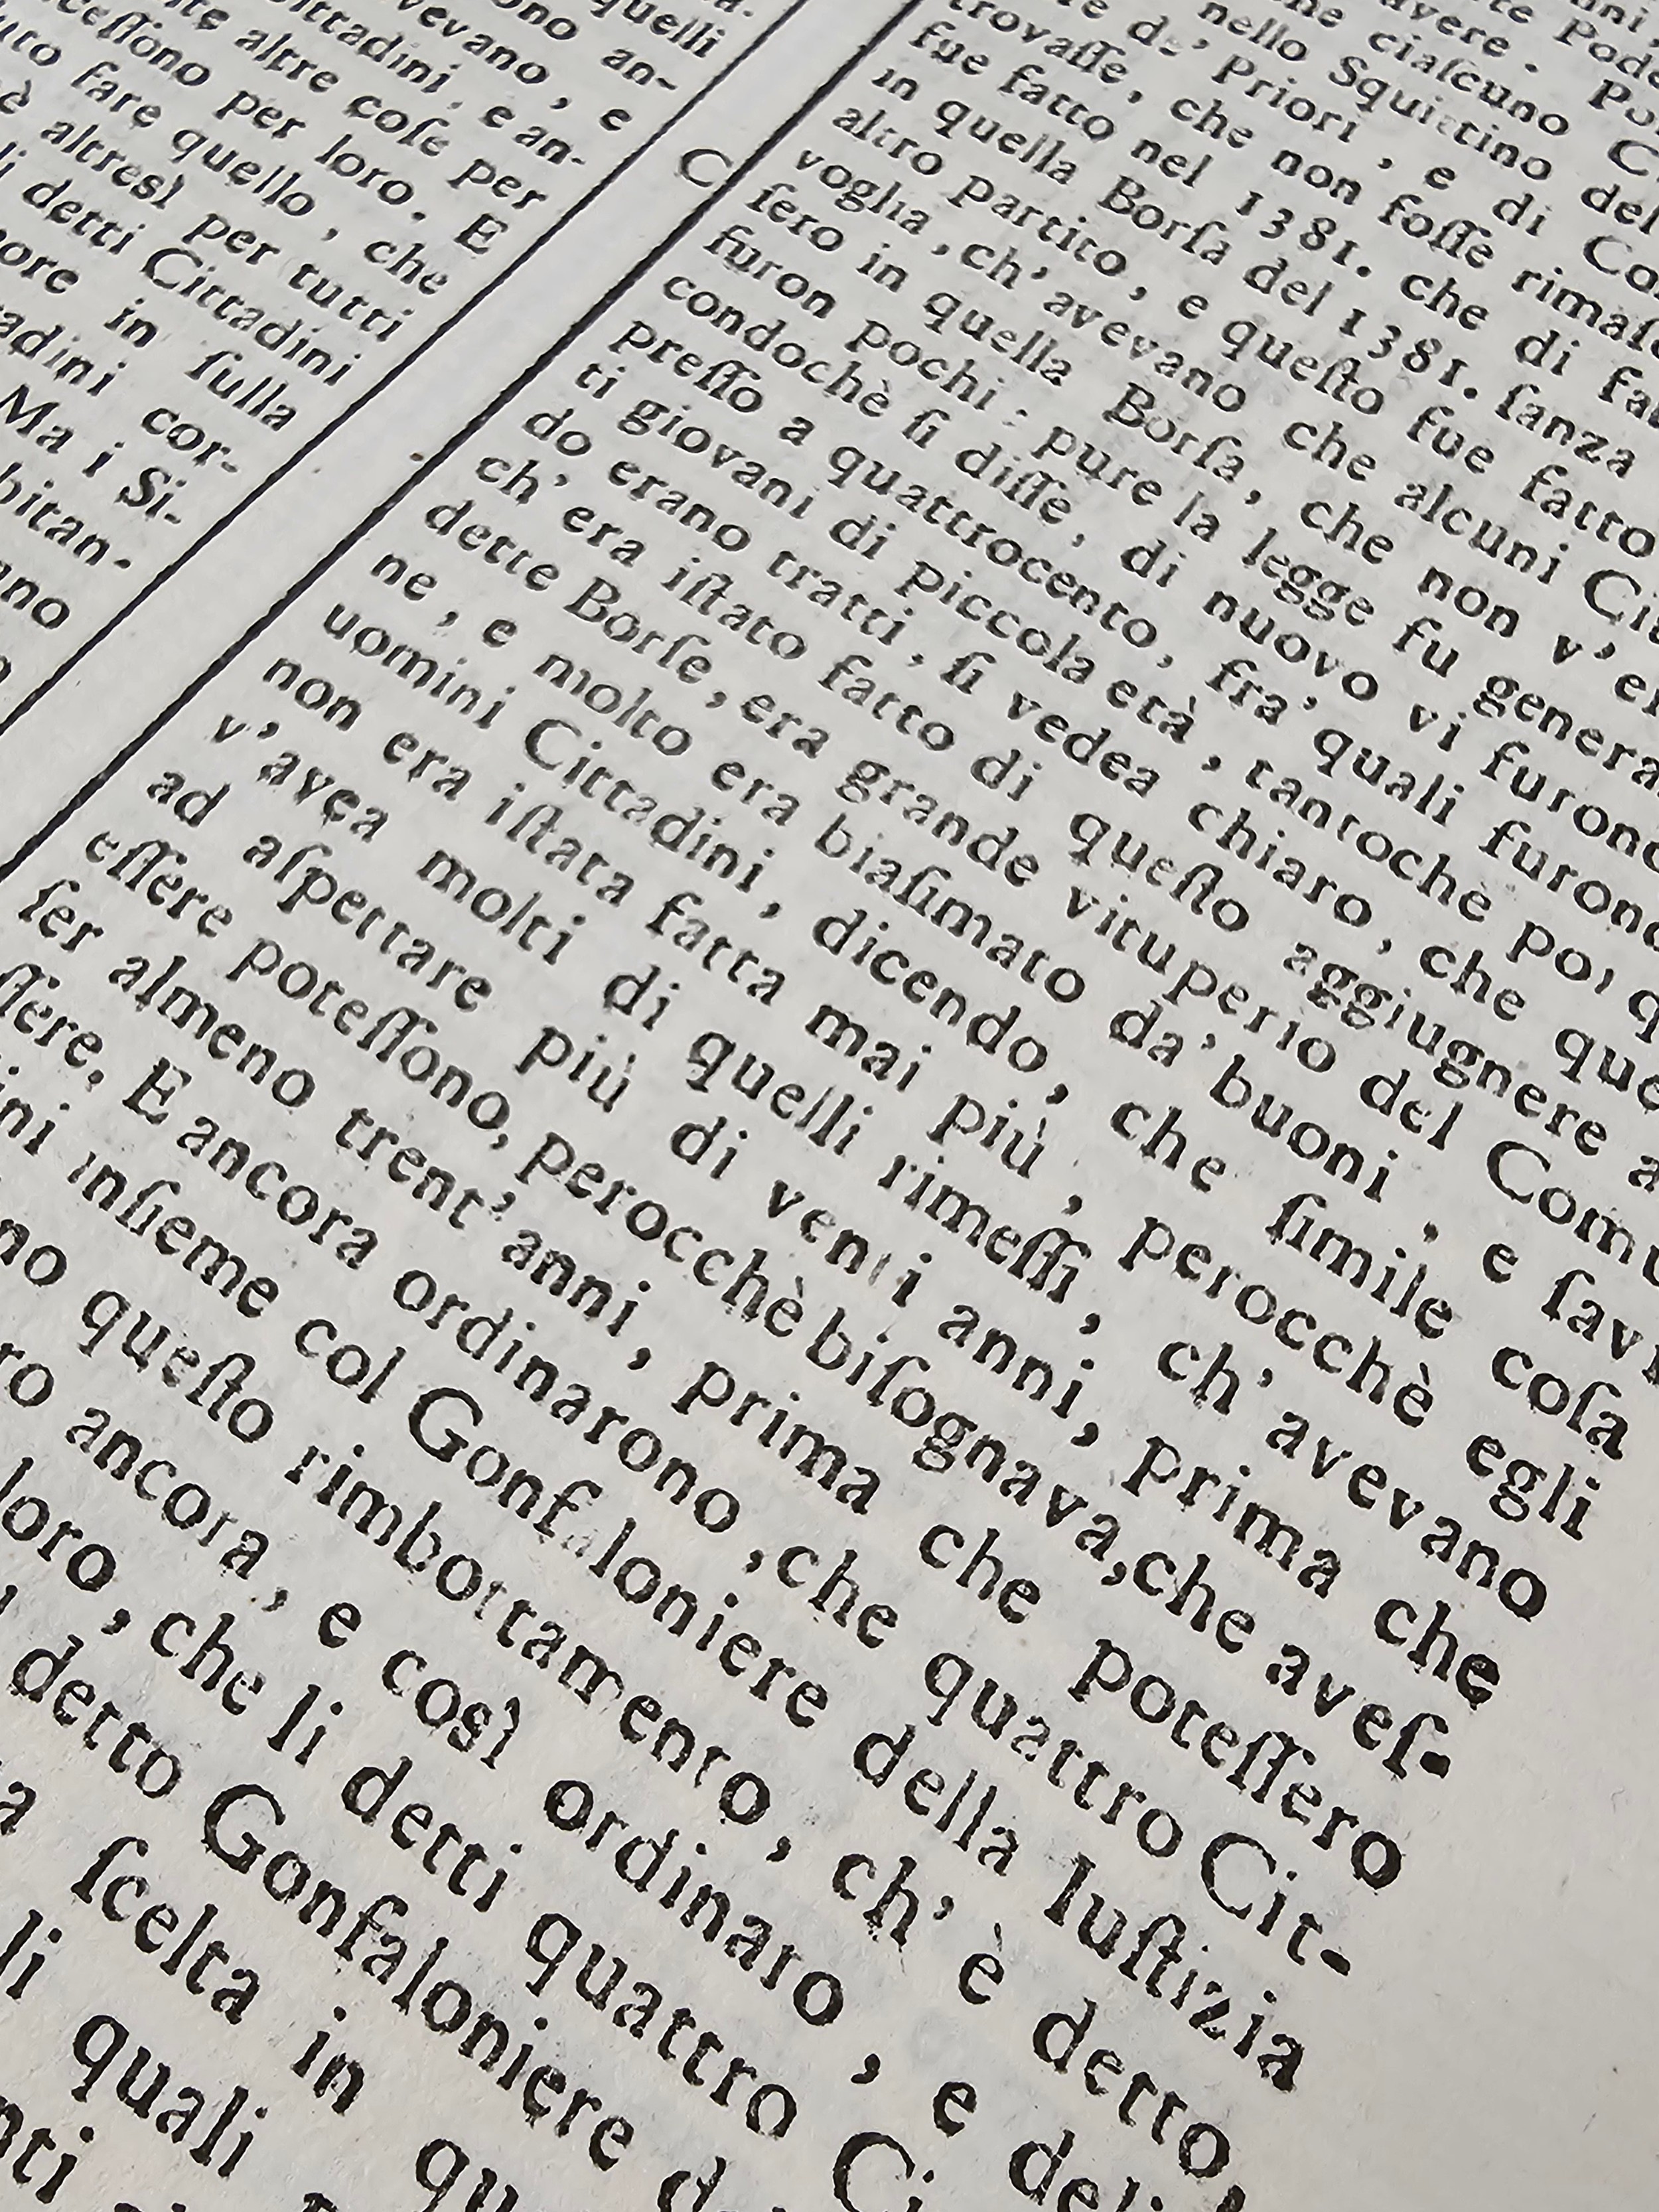 Rerum Italicarum Scriptores ab anno aerae Christianae Millesimo. Volume I and II. Published Florence - Image 8 of 8